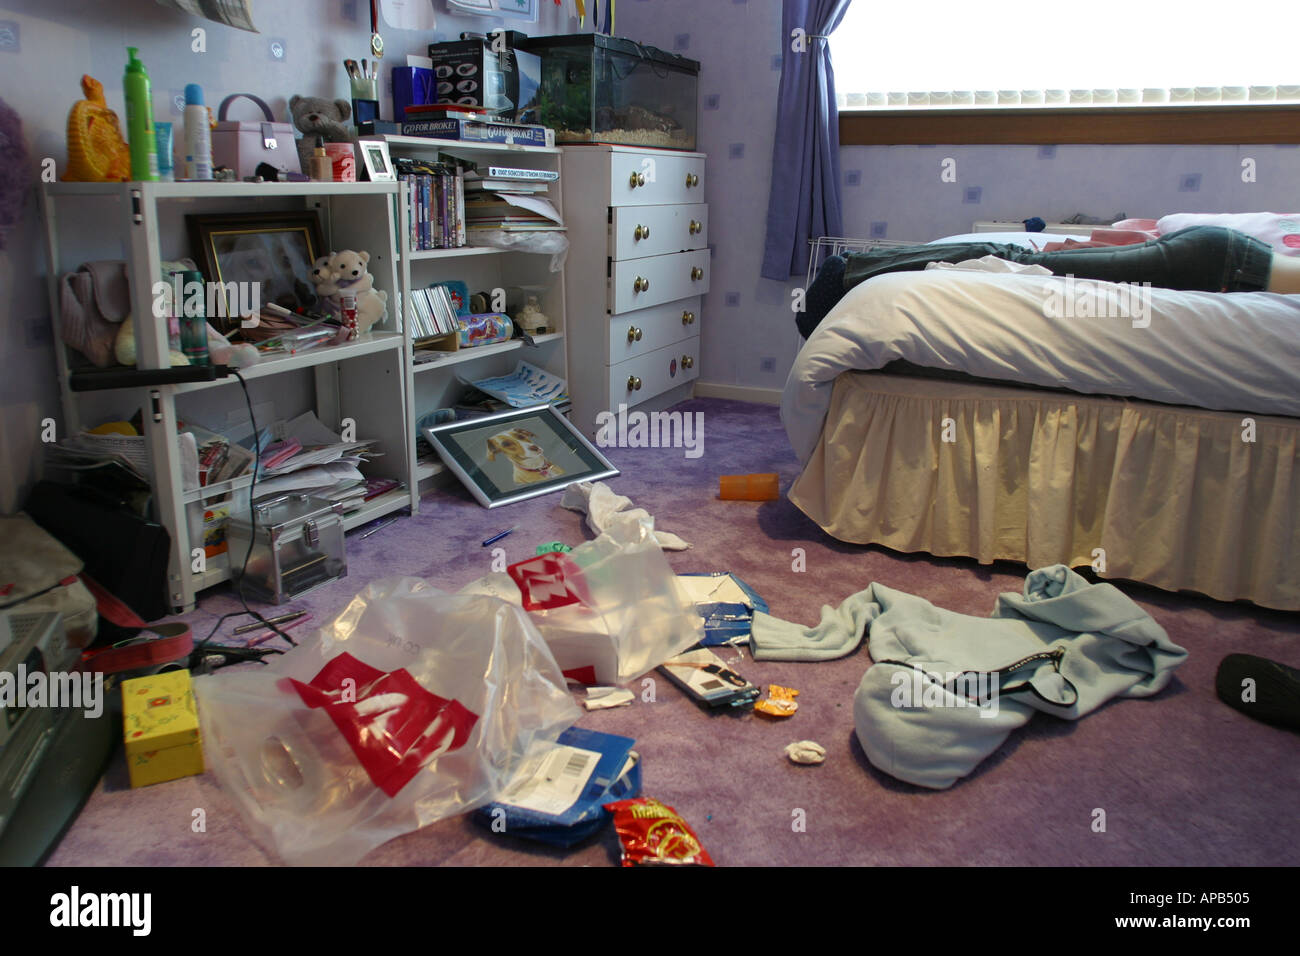 Teenage Girl In Messy Bedroom Stock Photo 1488132 Alamy